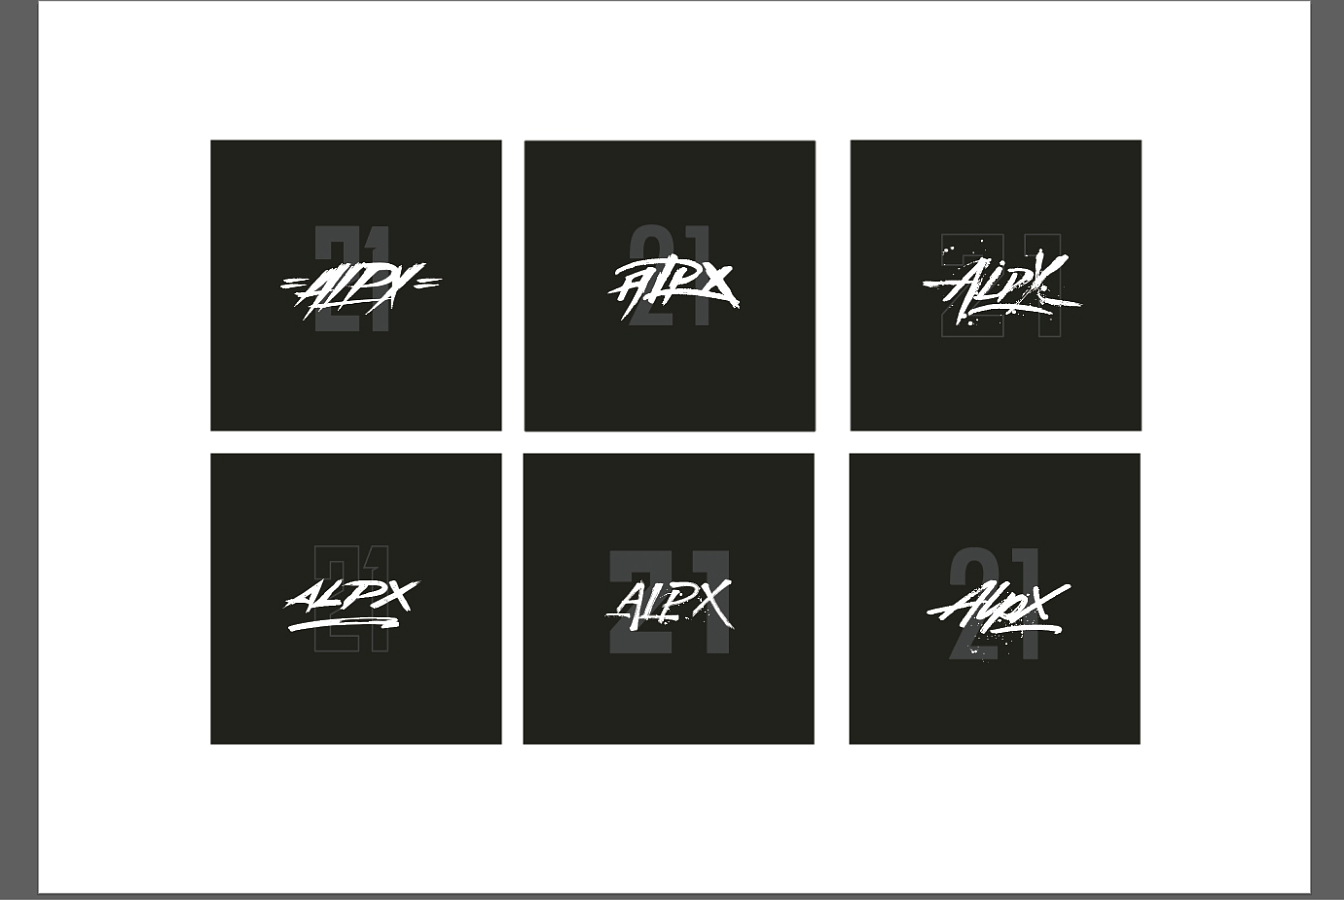 ALPX - image 3